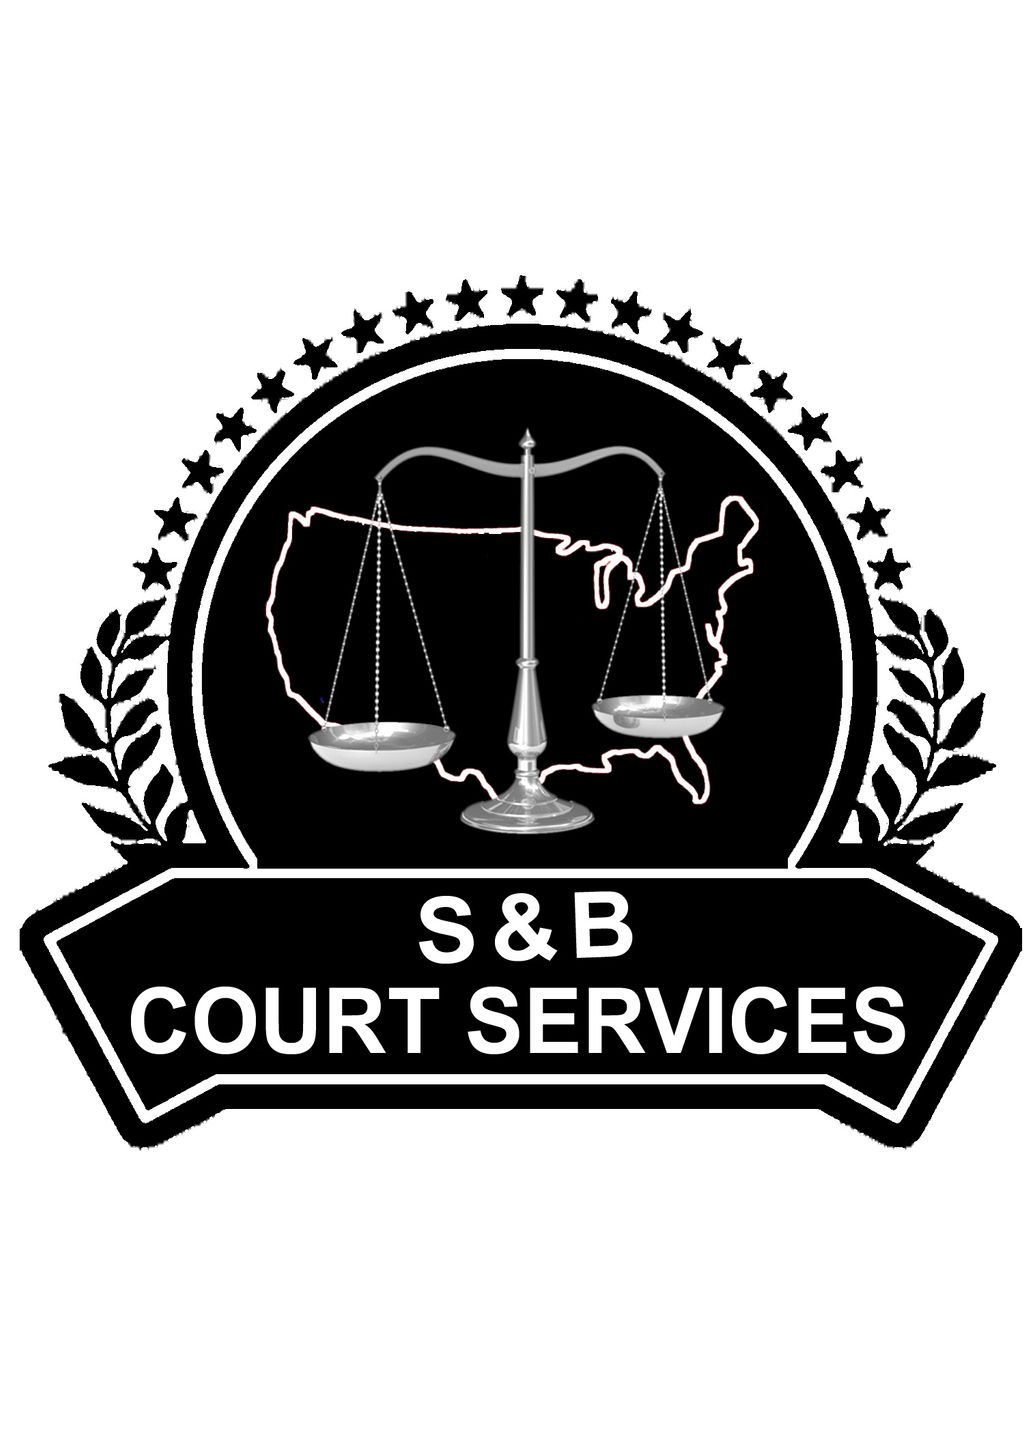 S&B Court Services